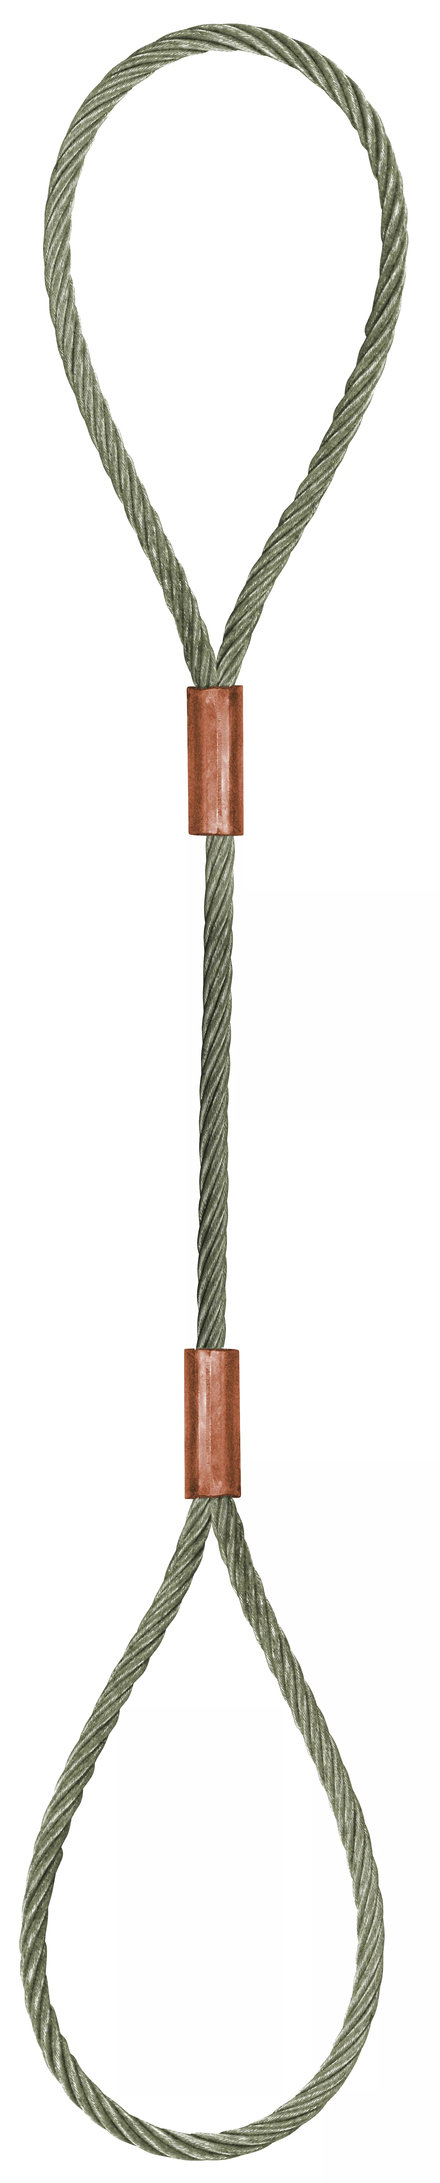 Élingue câble inox 2 grandes boucles d.5 mm cmu 0,28 t LEVAC - 4700BI